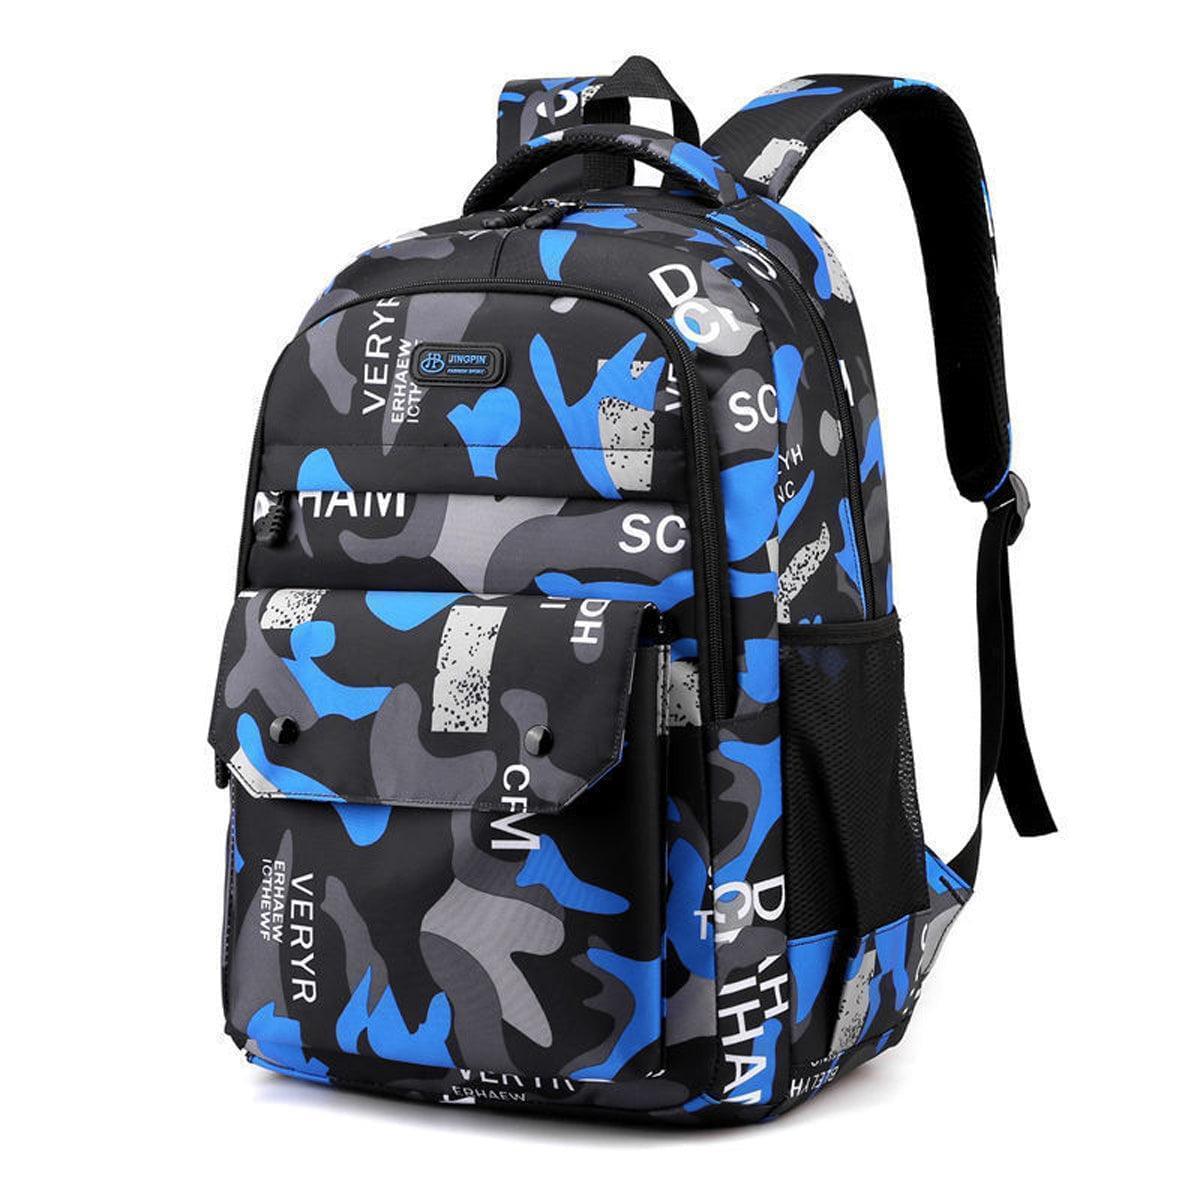 Backpack for Teens Boys